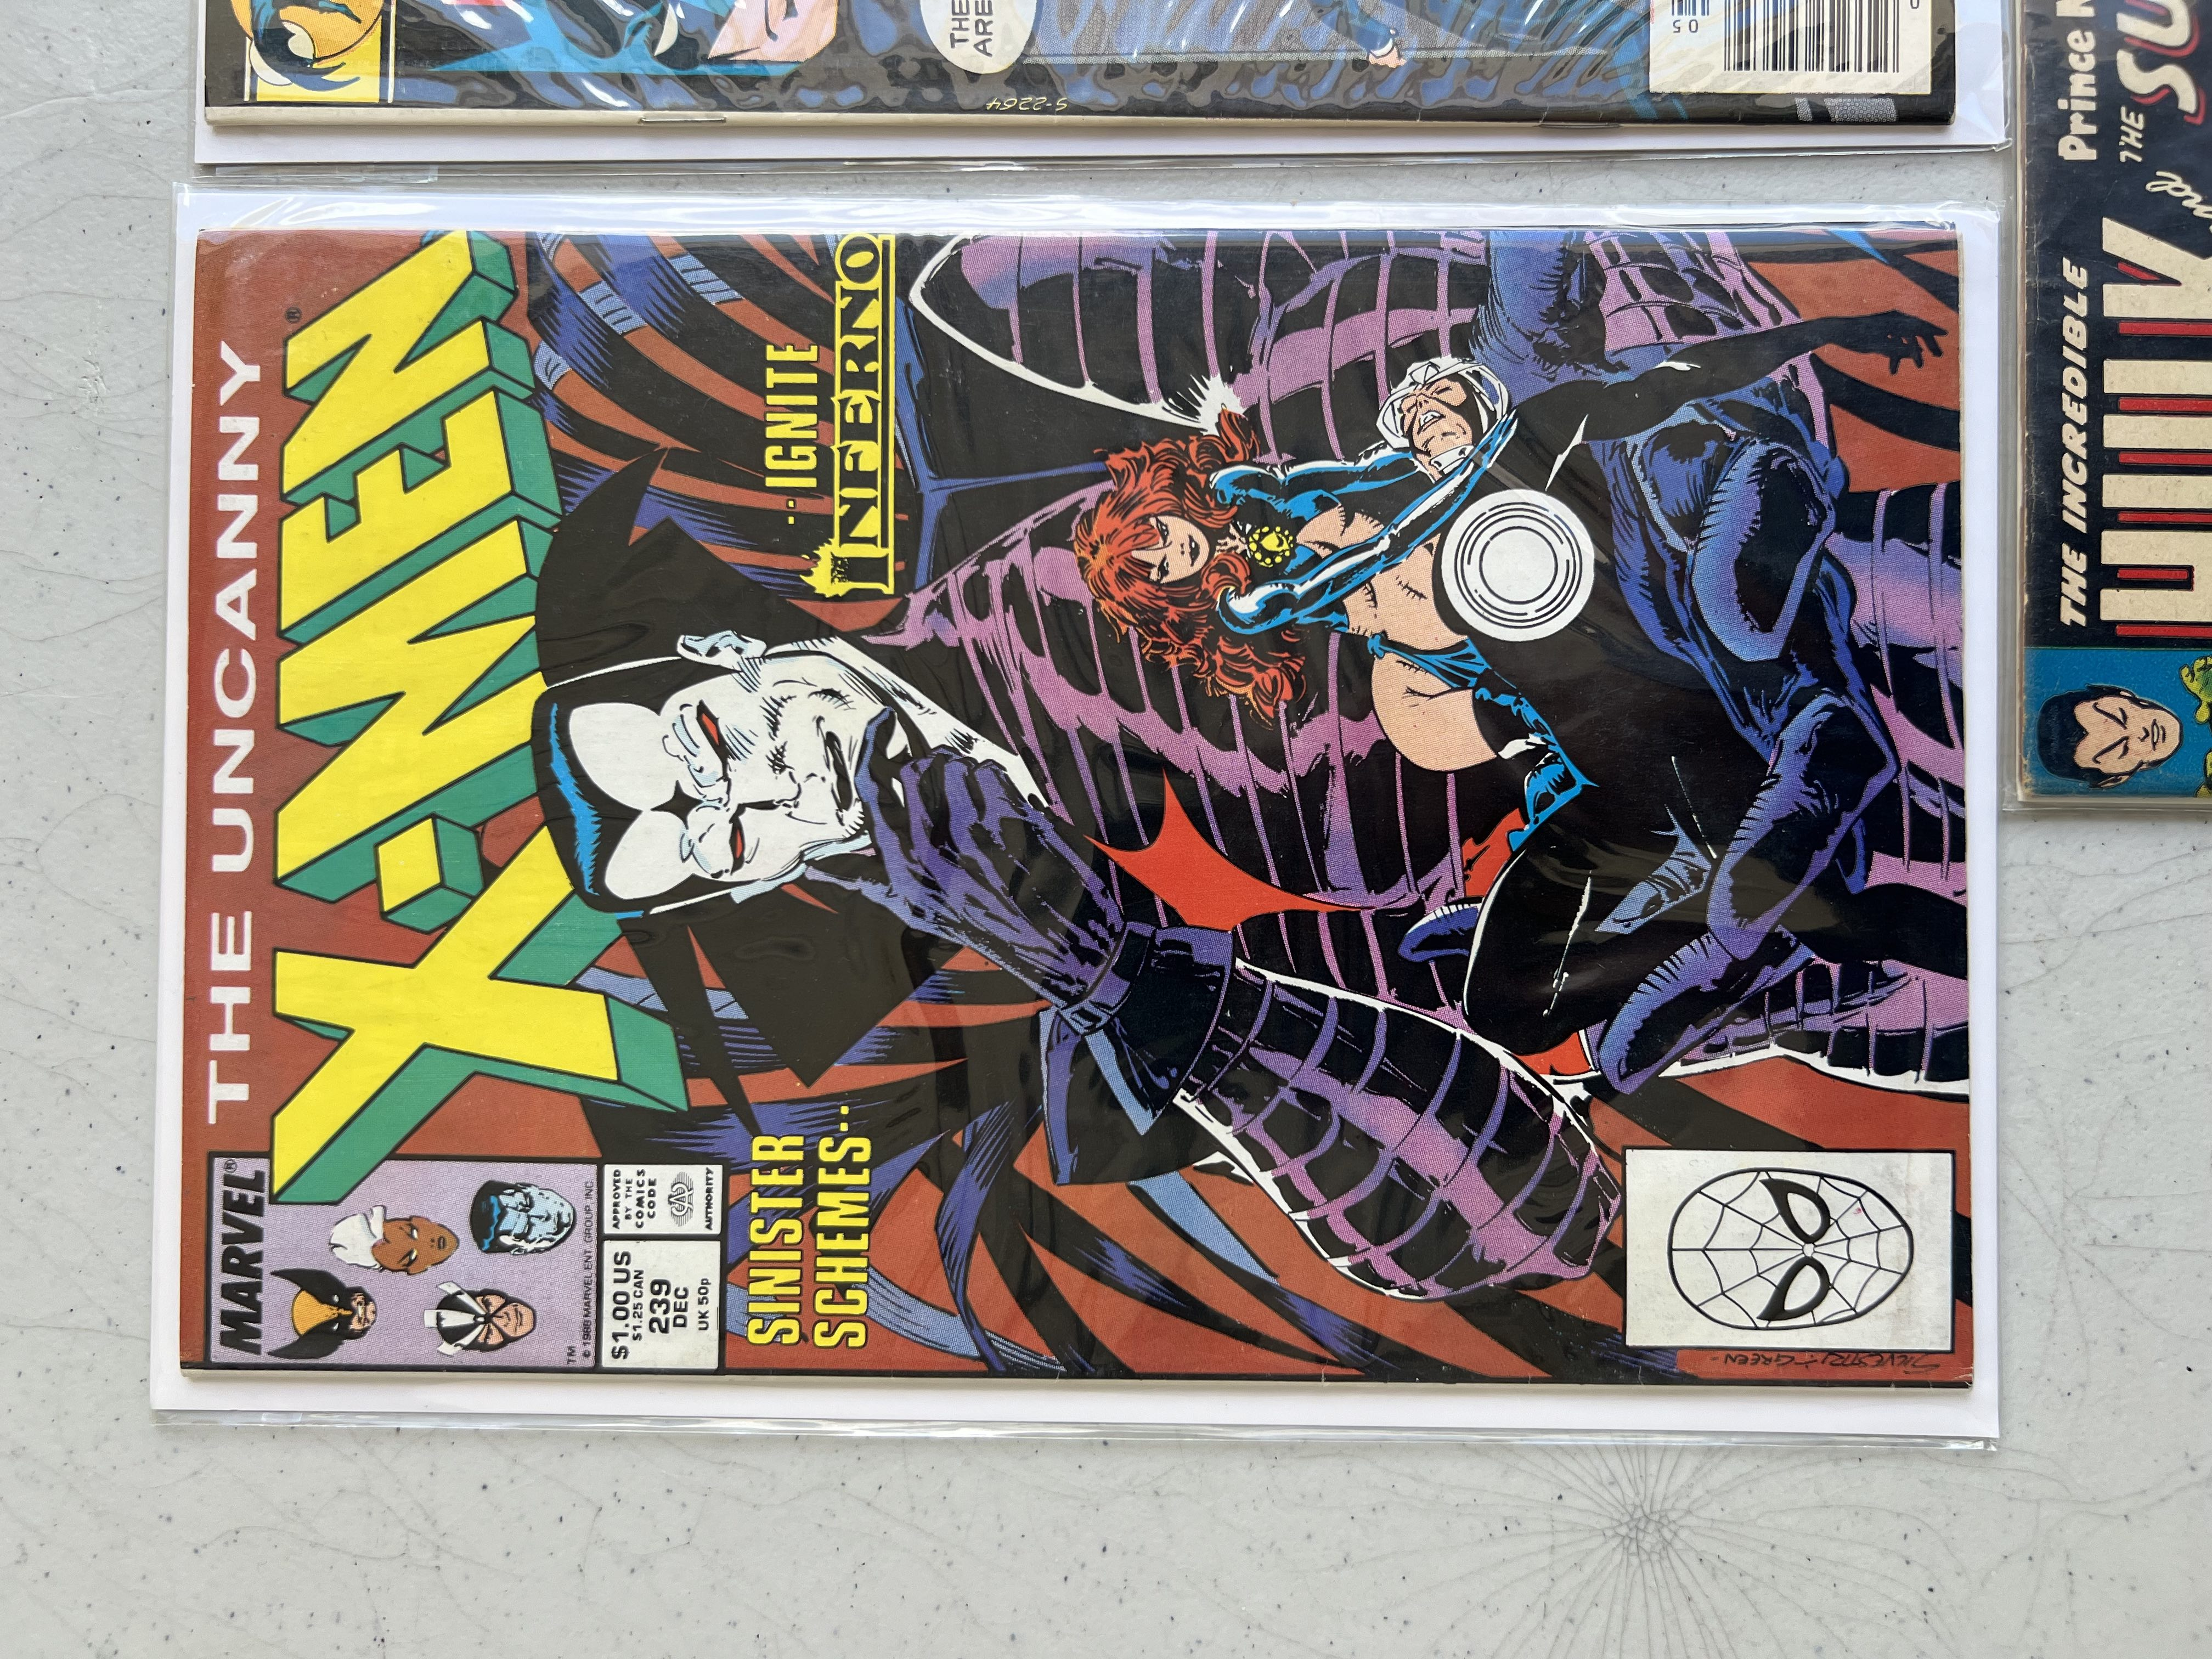 Comic Book X-Men 239, Batman Detective 459, Hulk Sub-Mariner 97